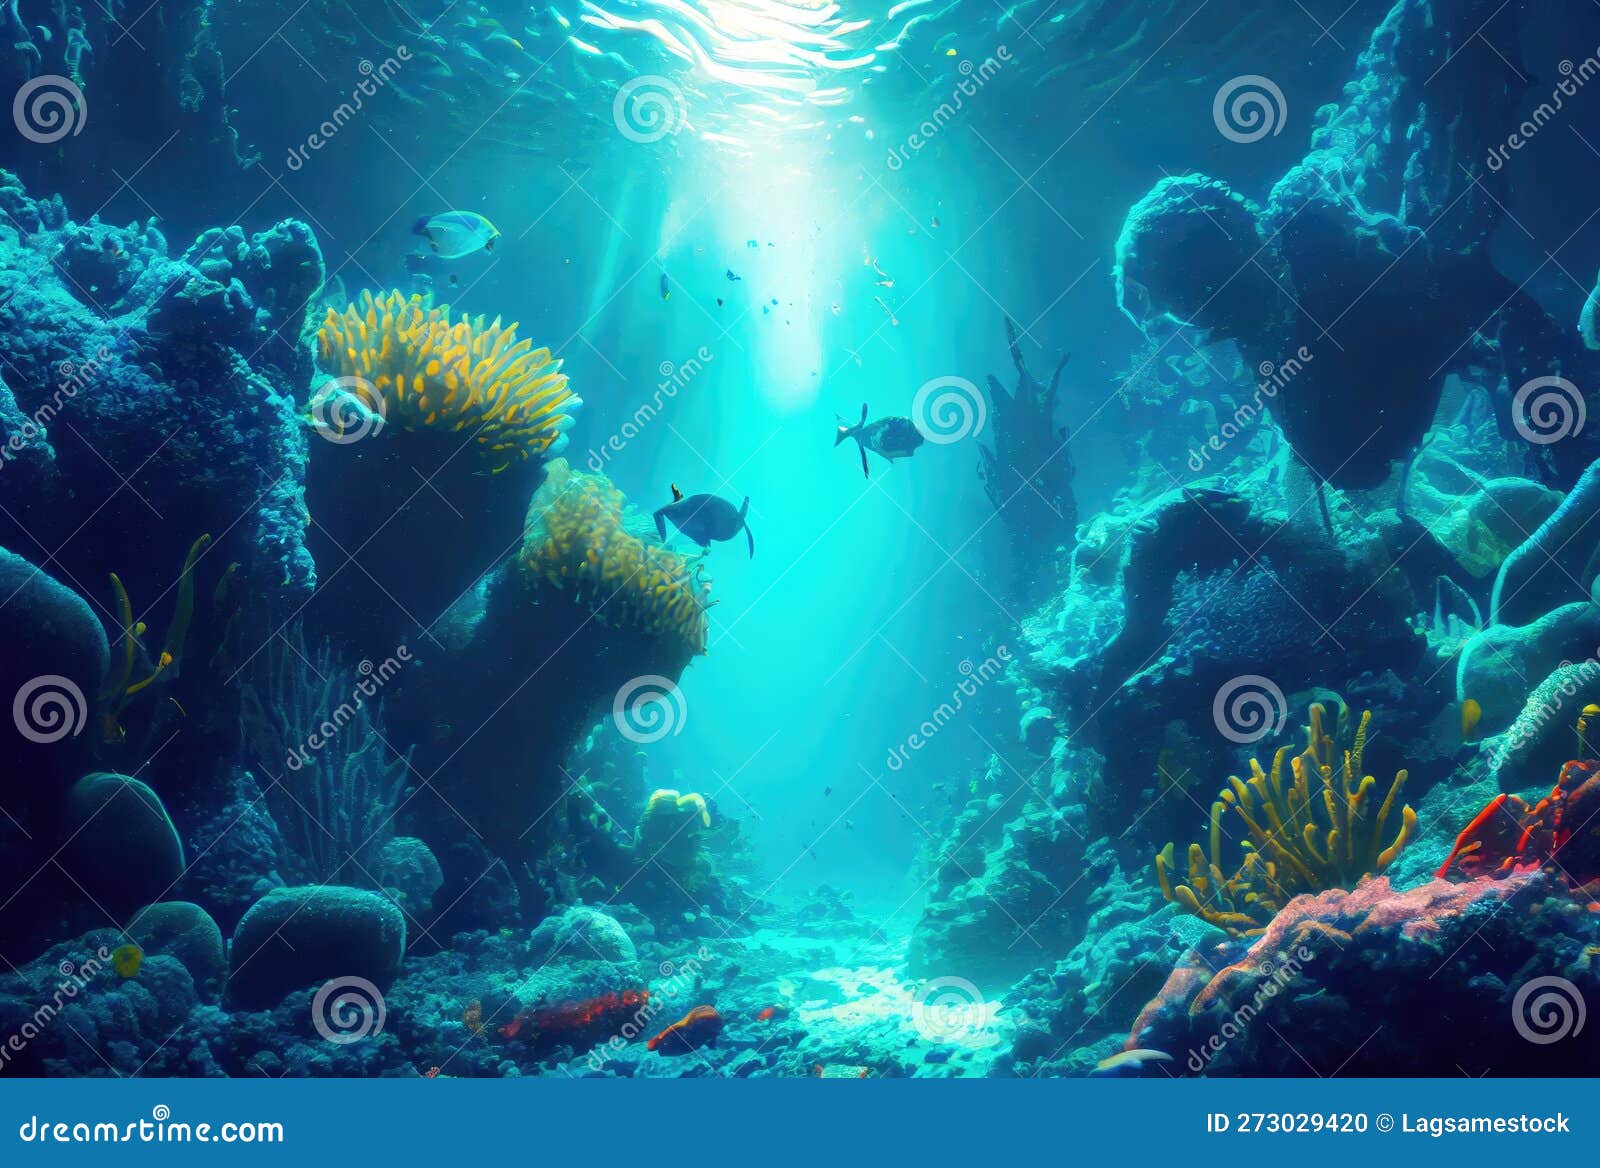 Deep Sea and Aquatic Life with Sunshine Background. Digital Art ...